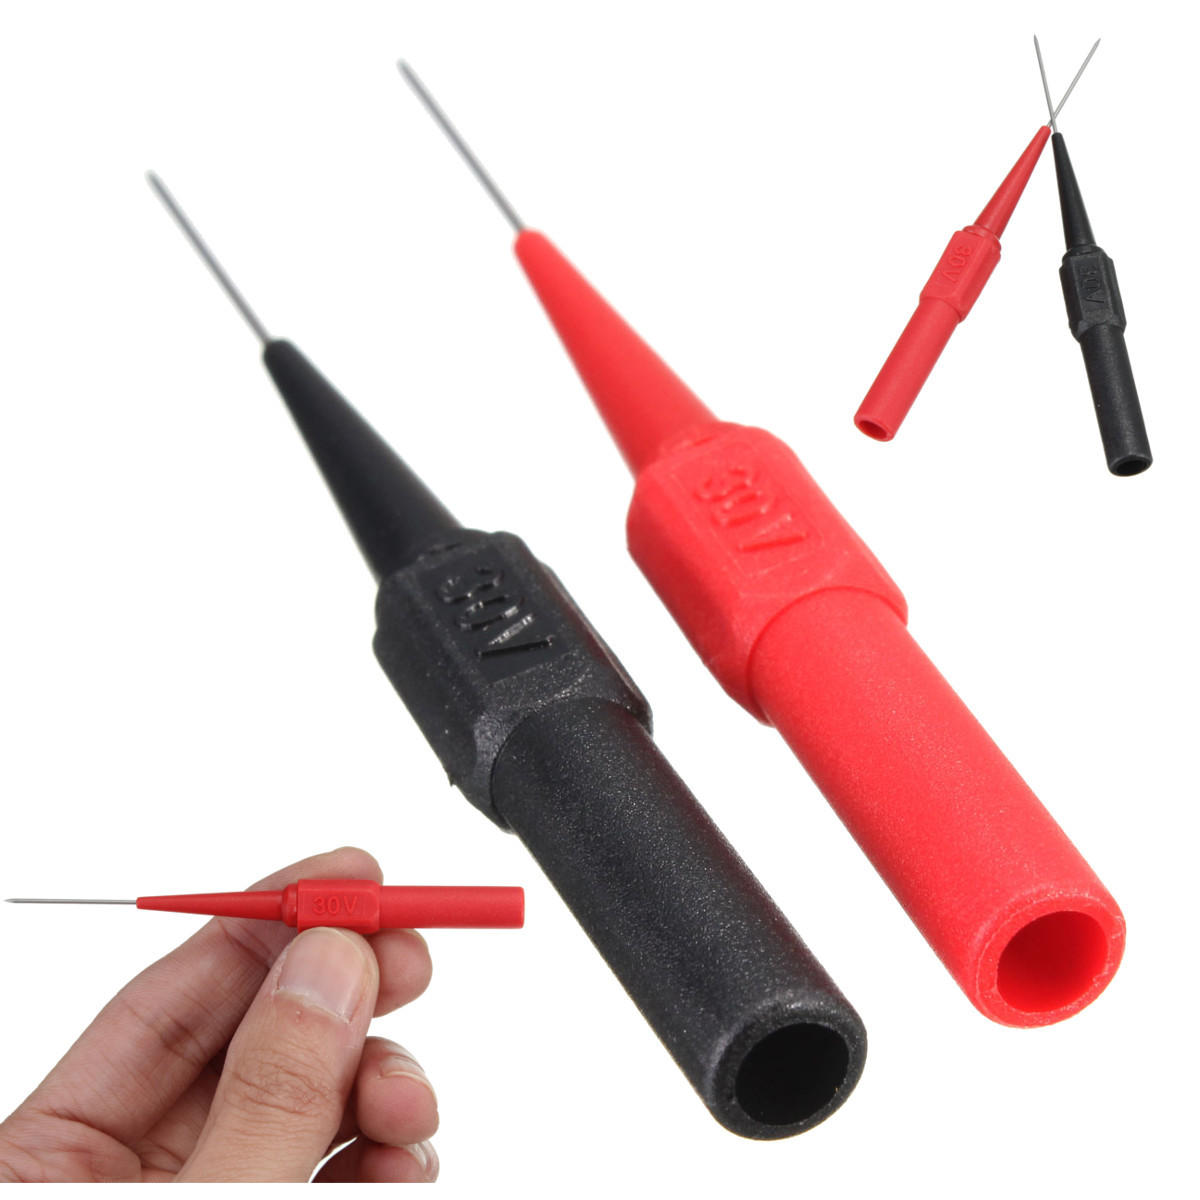 3pcs DANIU Insulation Piercing Needle Non-destructive Multimeter Test Probe Red/Black